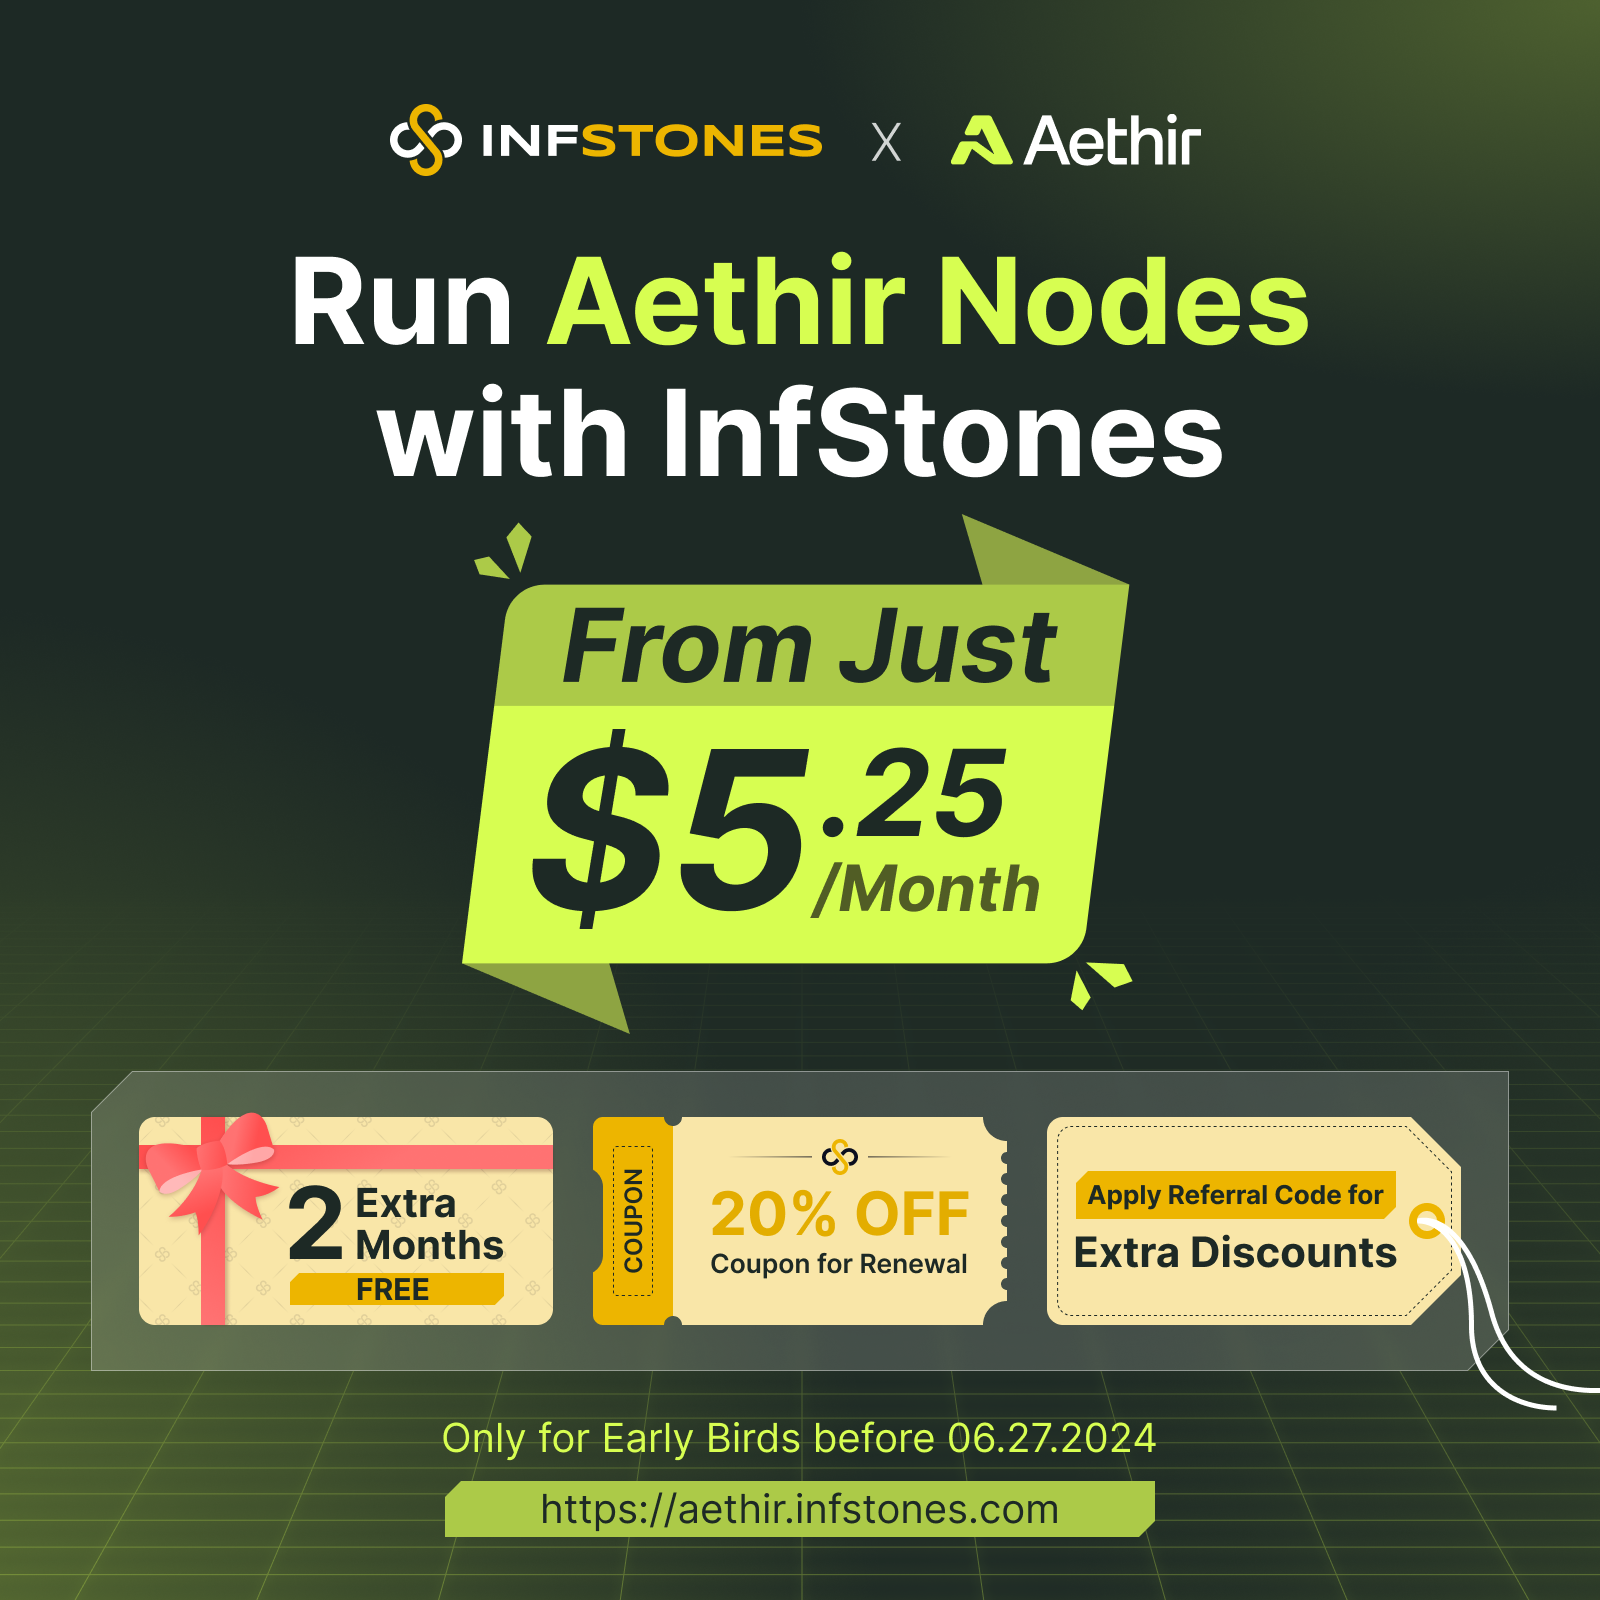 Run Aethir Node with InfStones: Enterprise-grade Service with Unbeatable Pricing